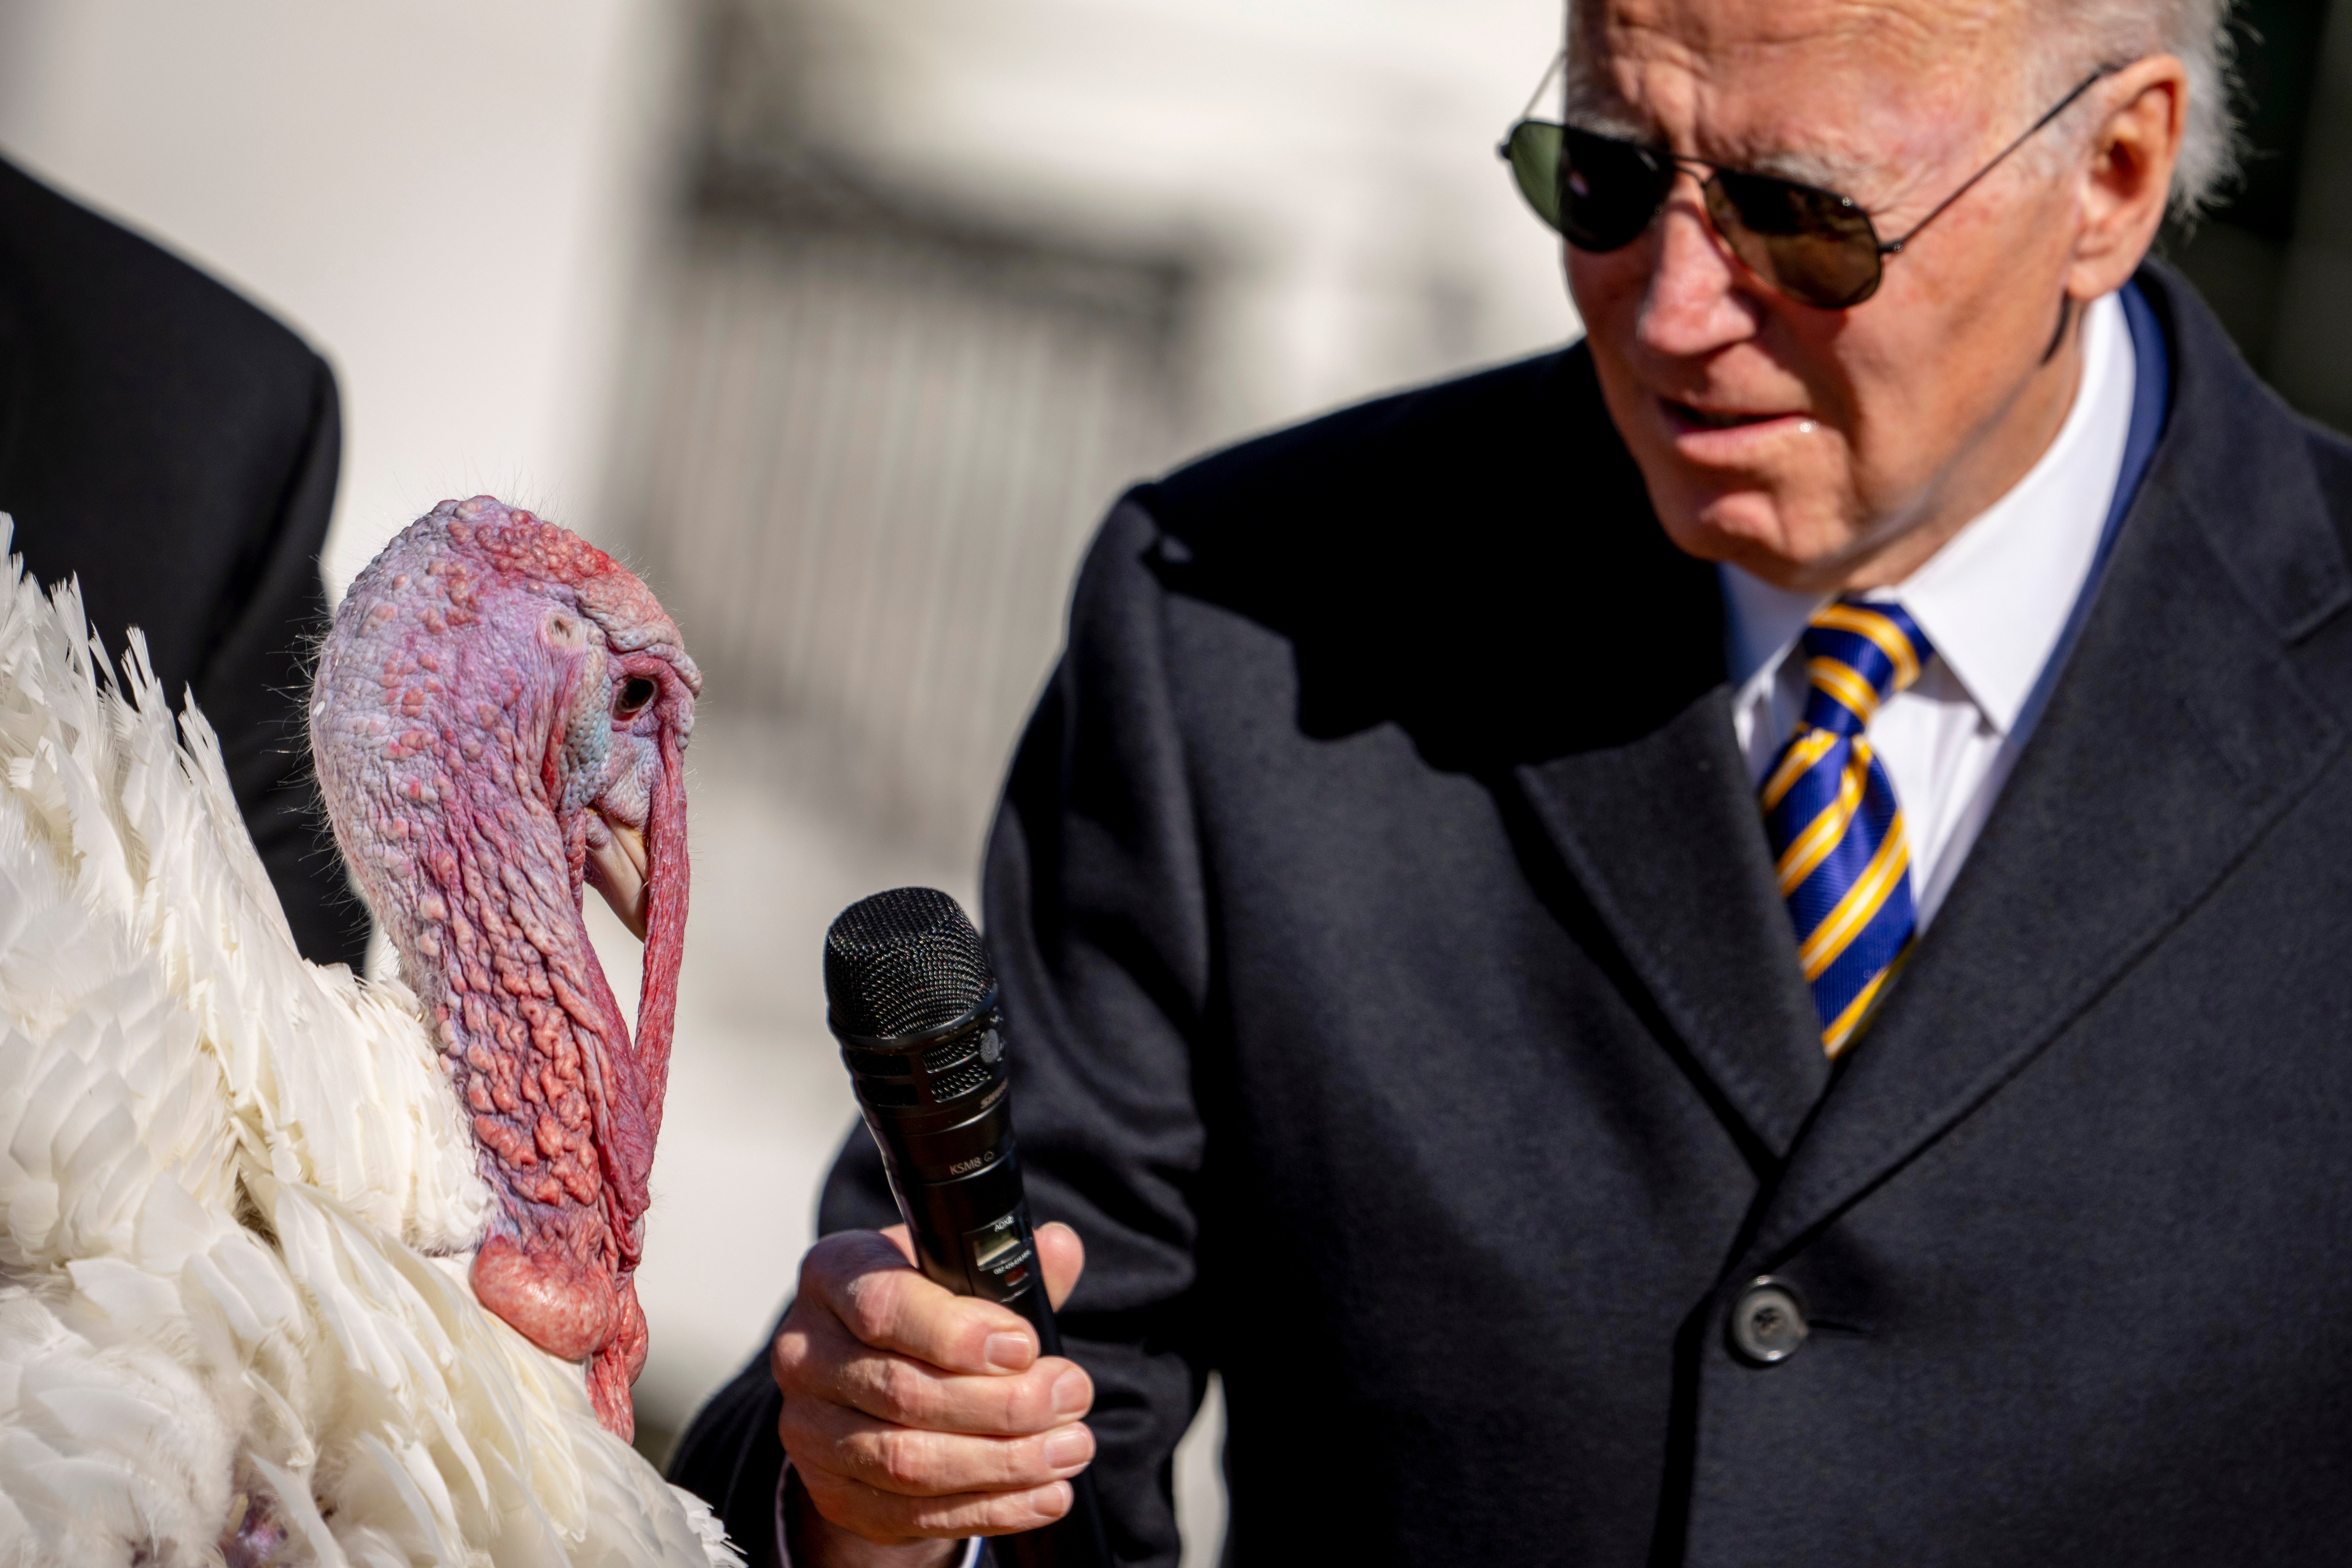 Joe Biden pardoned two turkeys this week